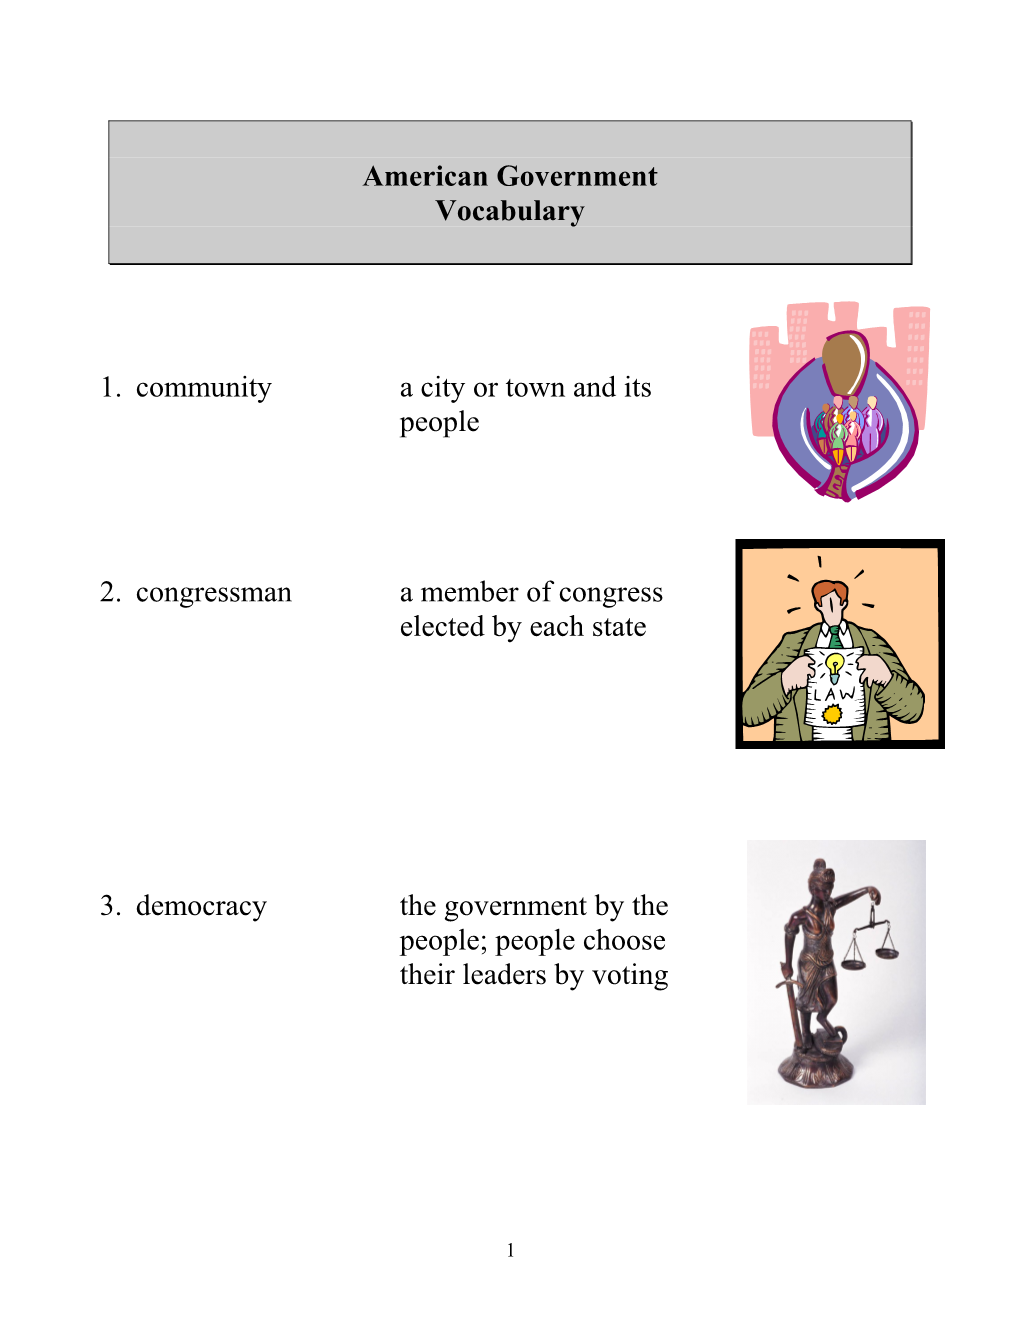 American Government Vocabulary